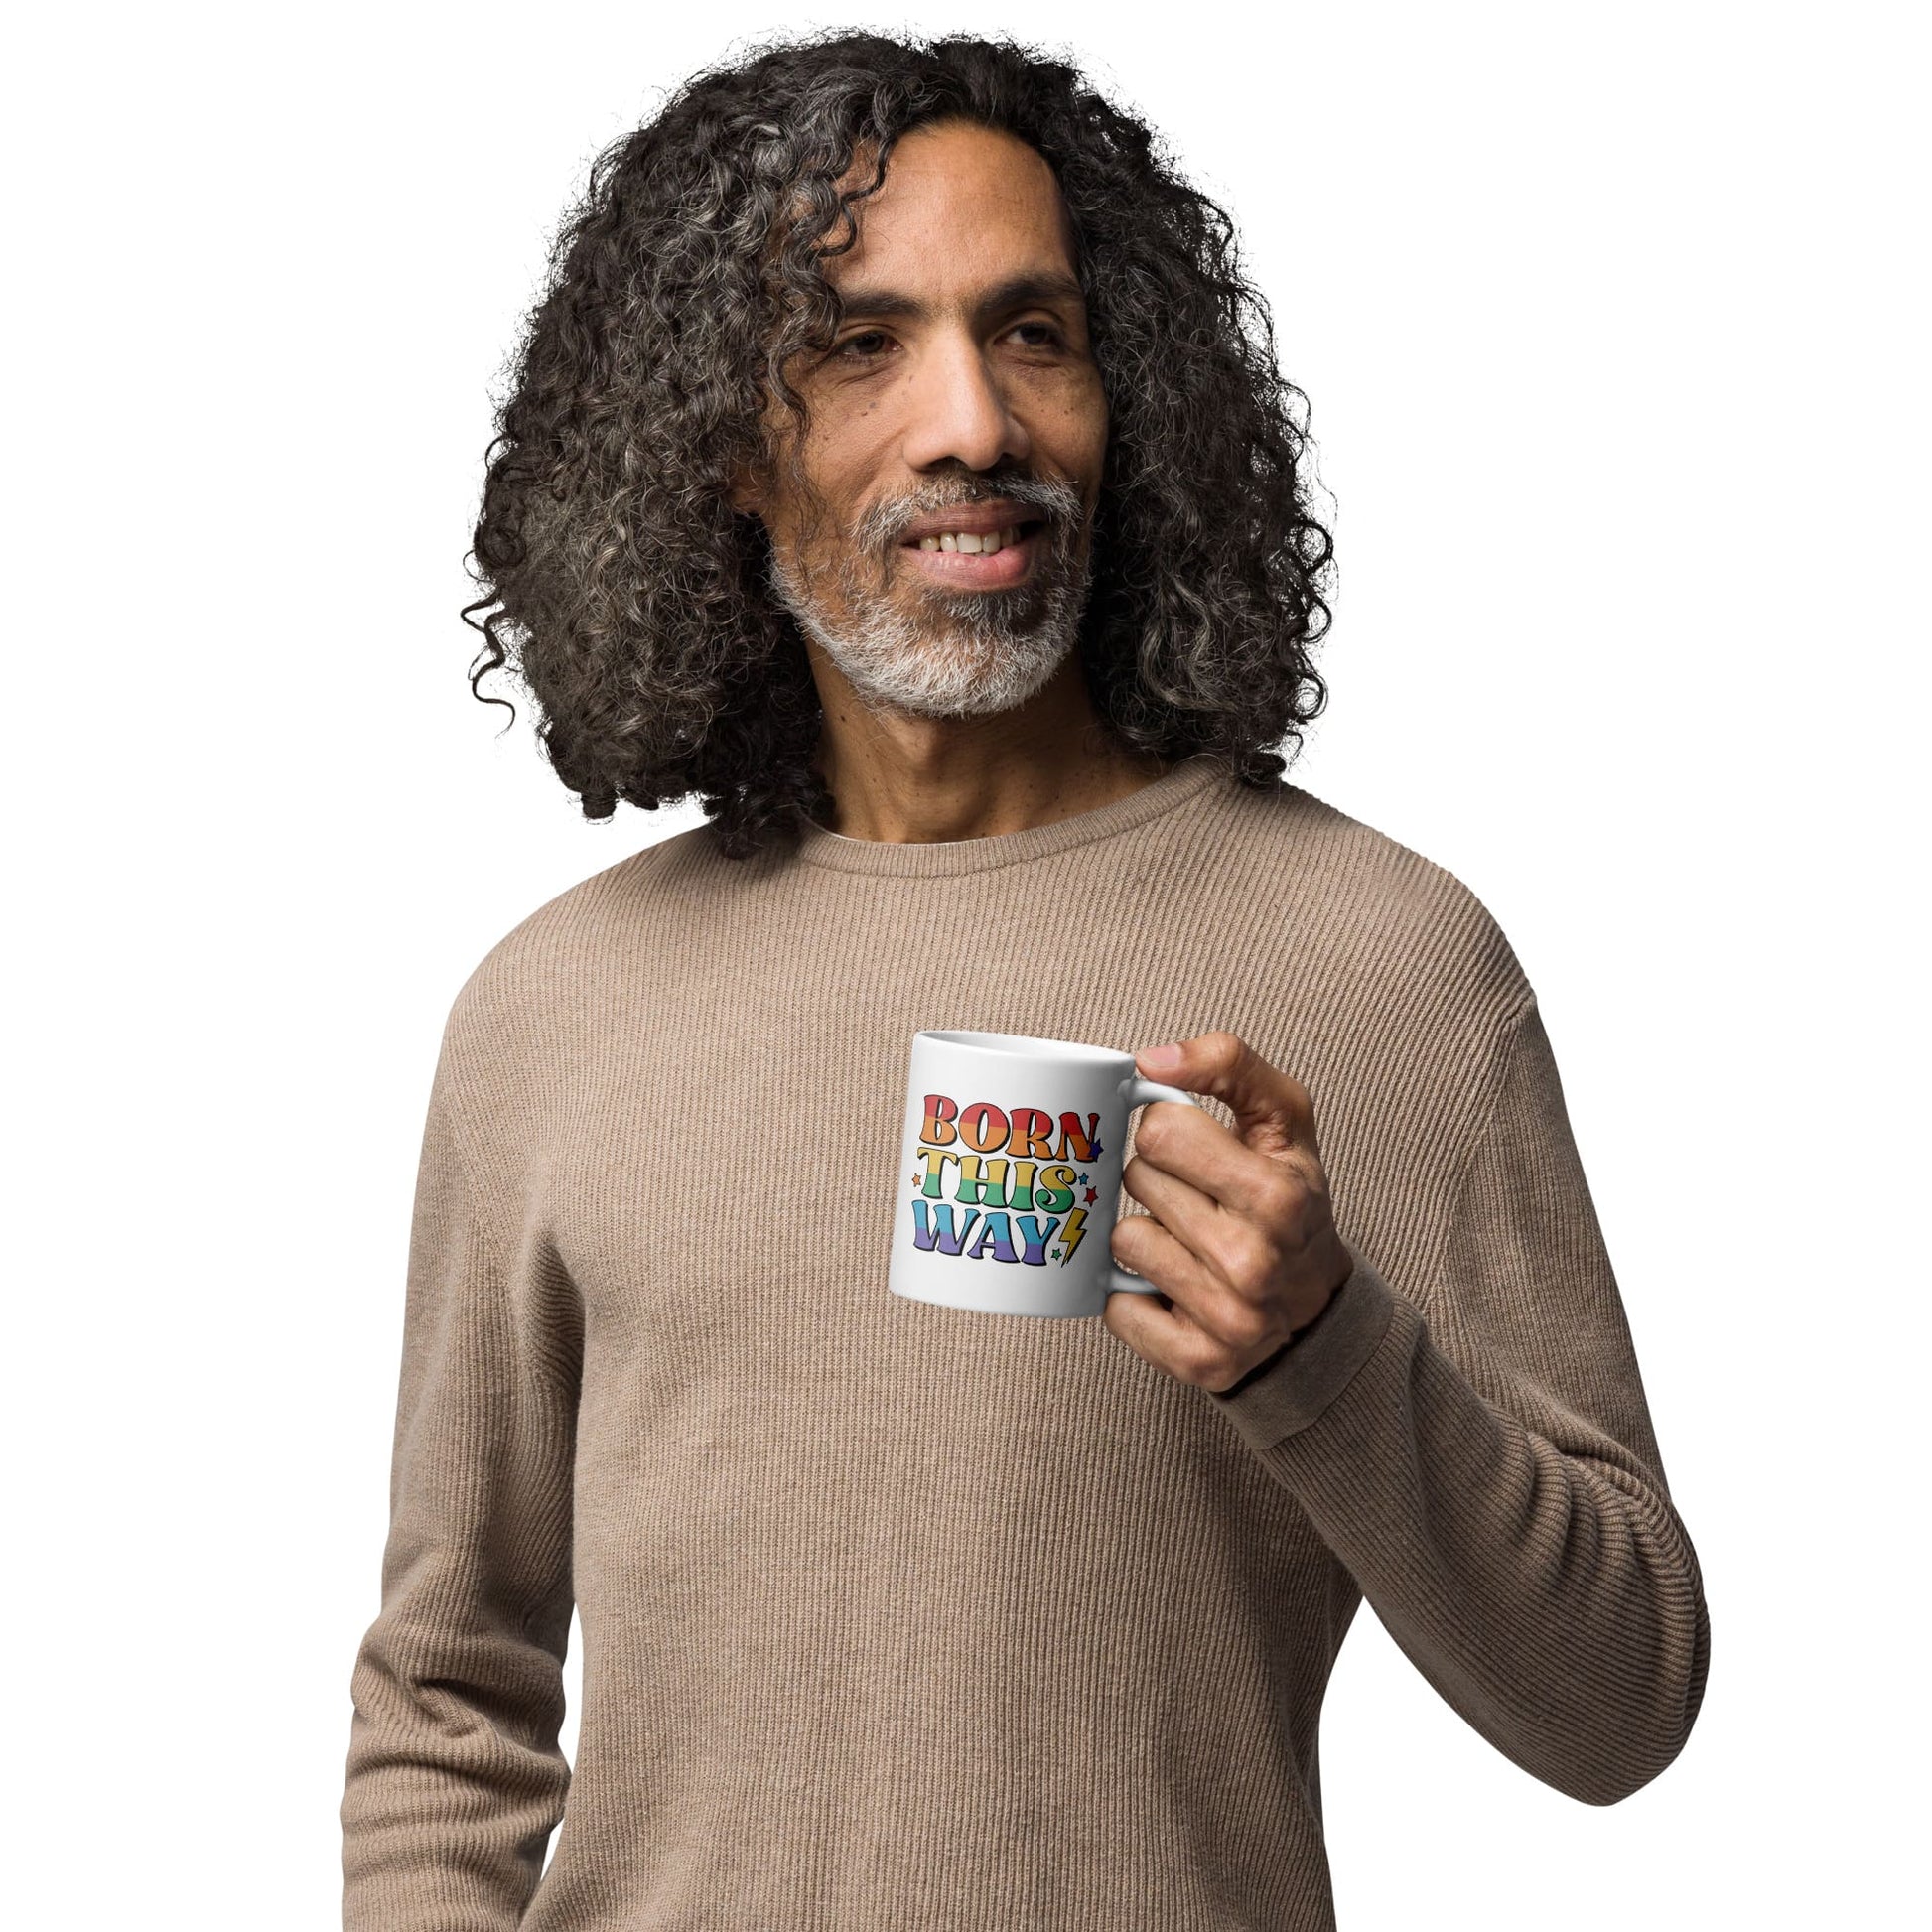 LGBTQ pride mug, born this way coffee or tea cup, model